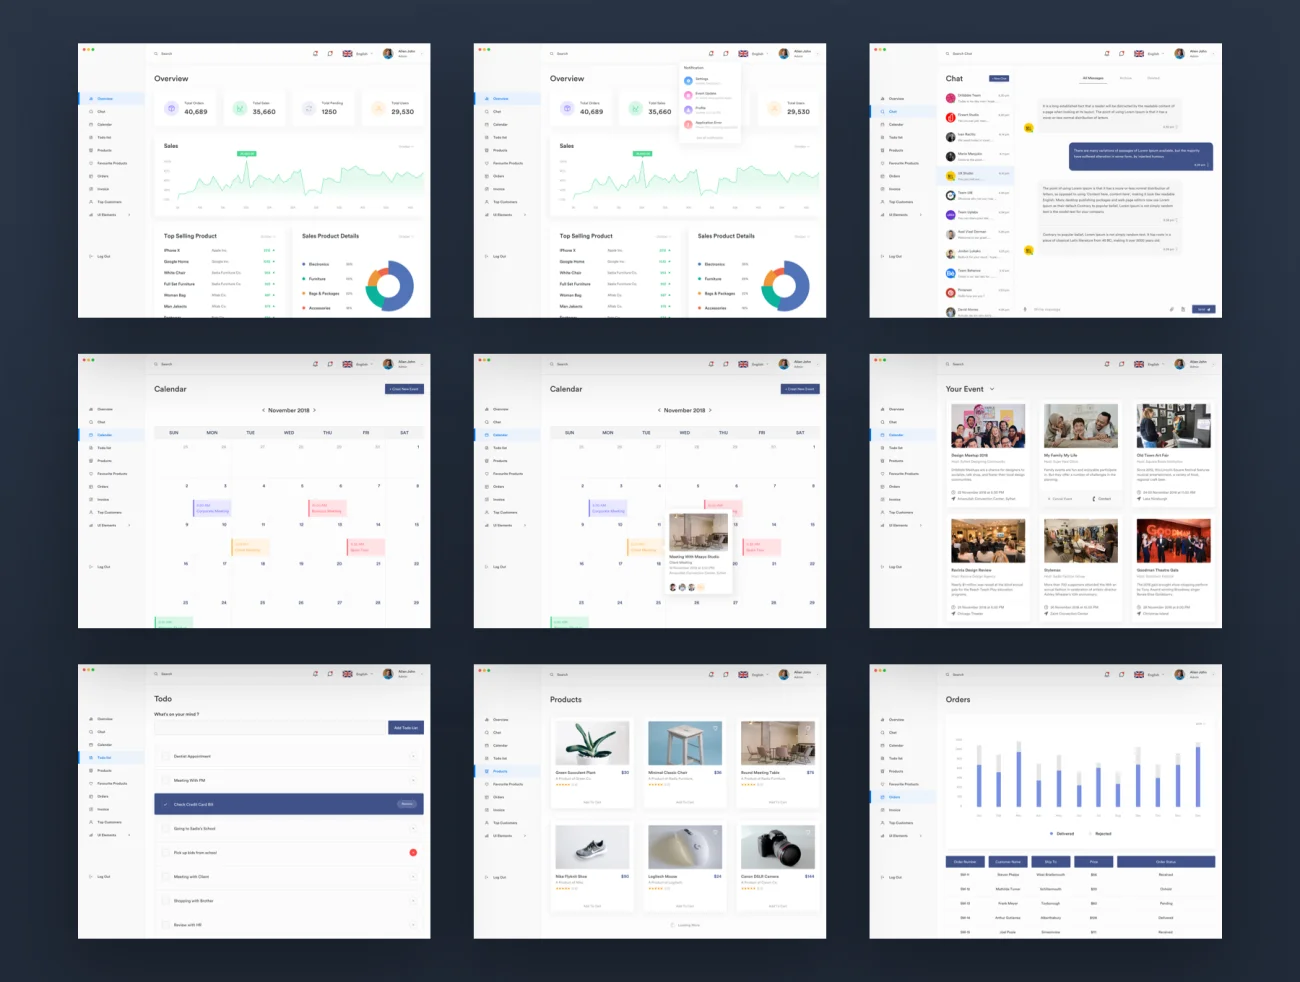 Alaina Dashboard UI Kit — new Alaina 仪表板UI套件-新-UI/UX、ui套件、卡片式、图表、数据可视化-仪表板、表单-到位啦UI